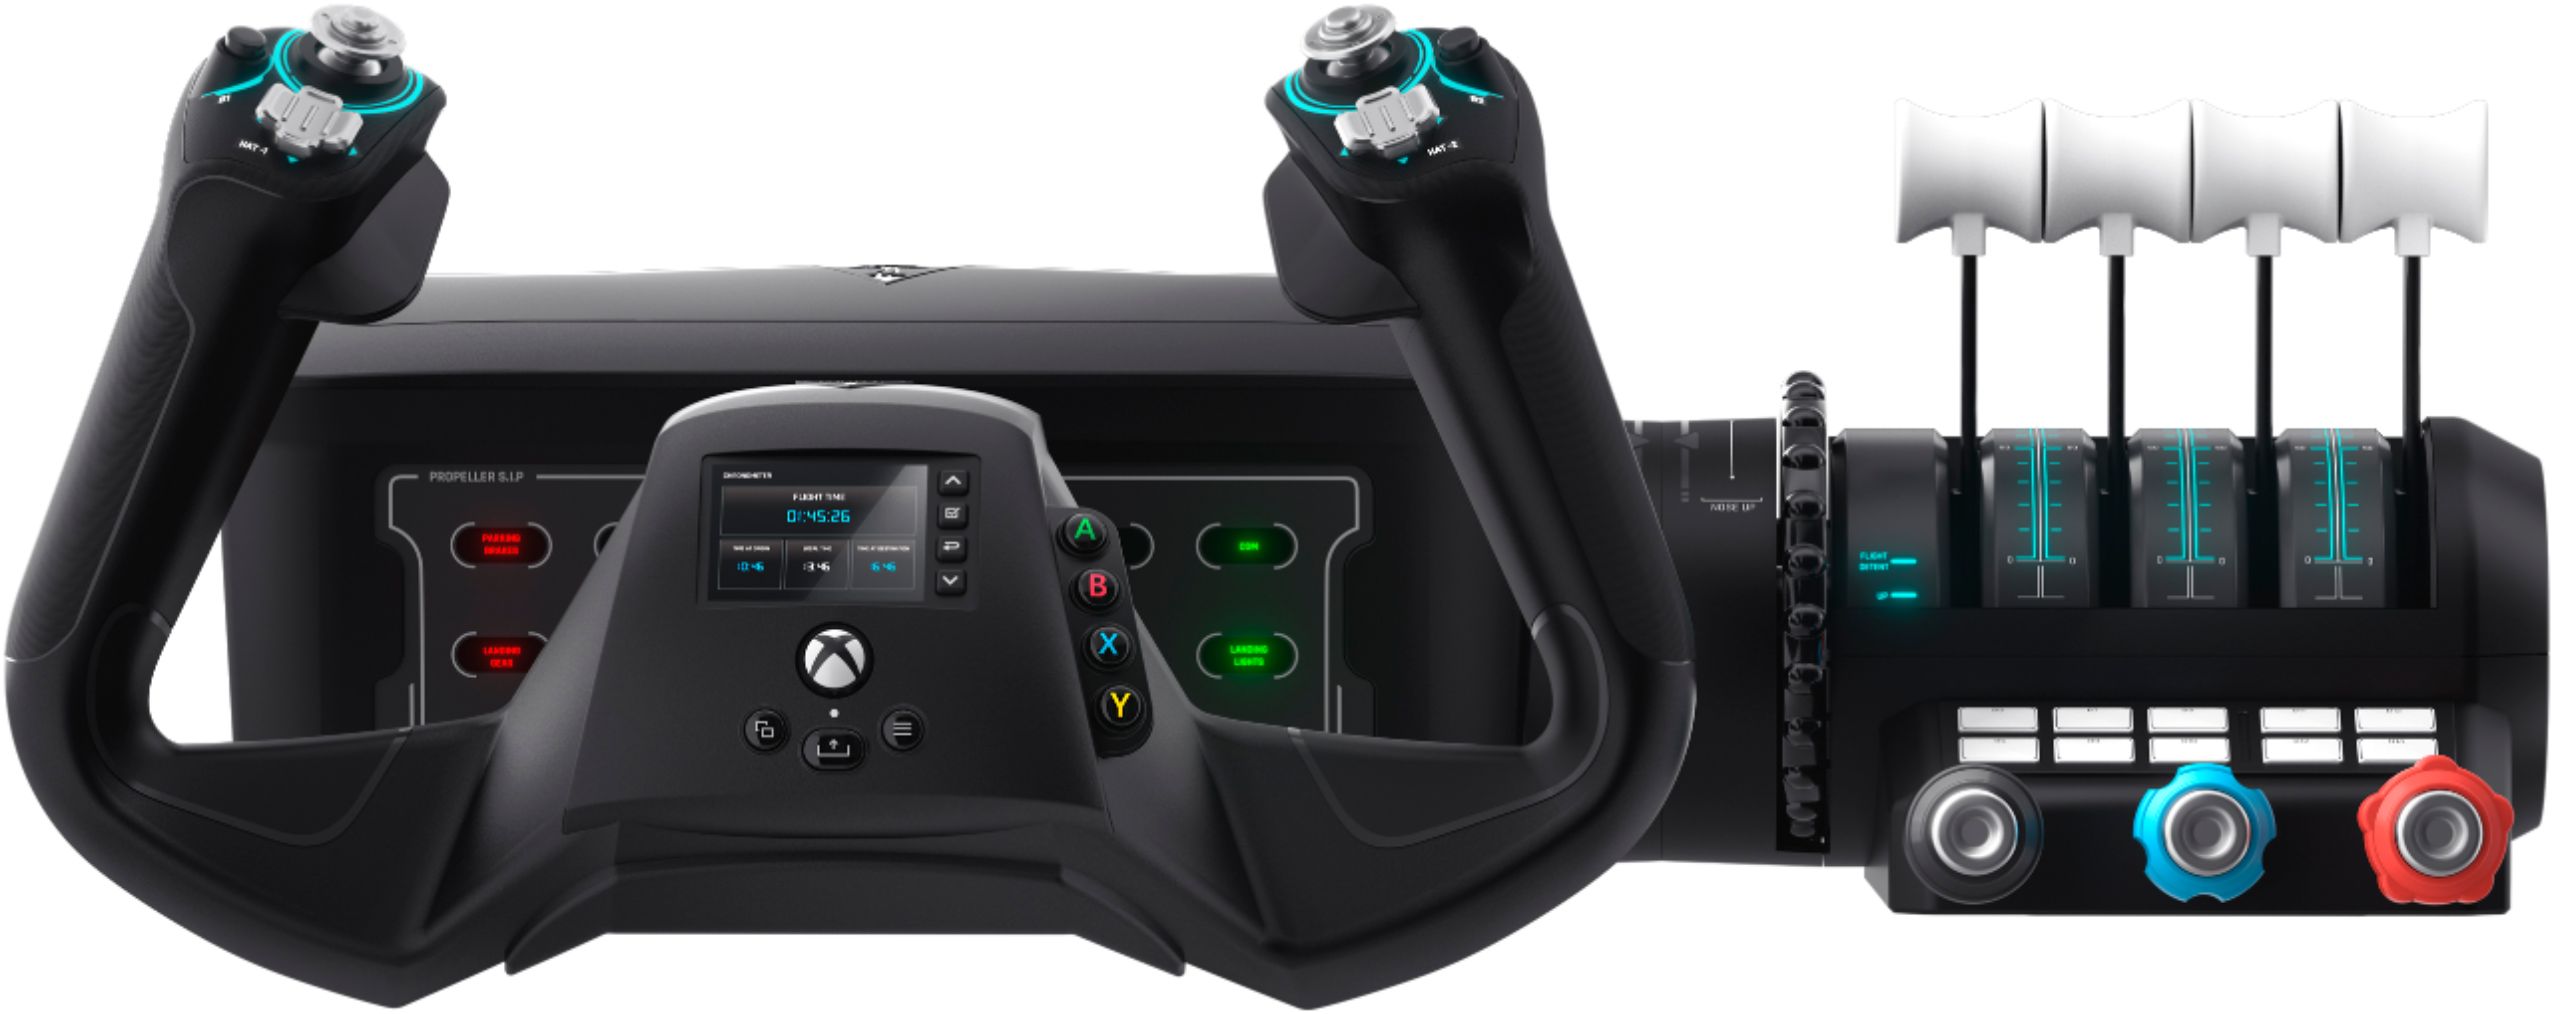 Review  Microsoft Flight Simulator for Consoles - XboxEra